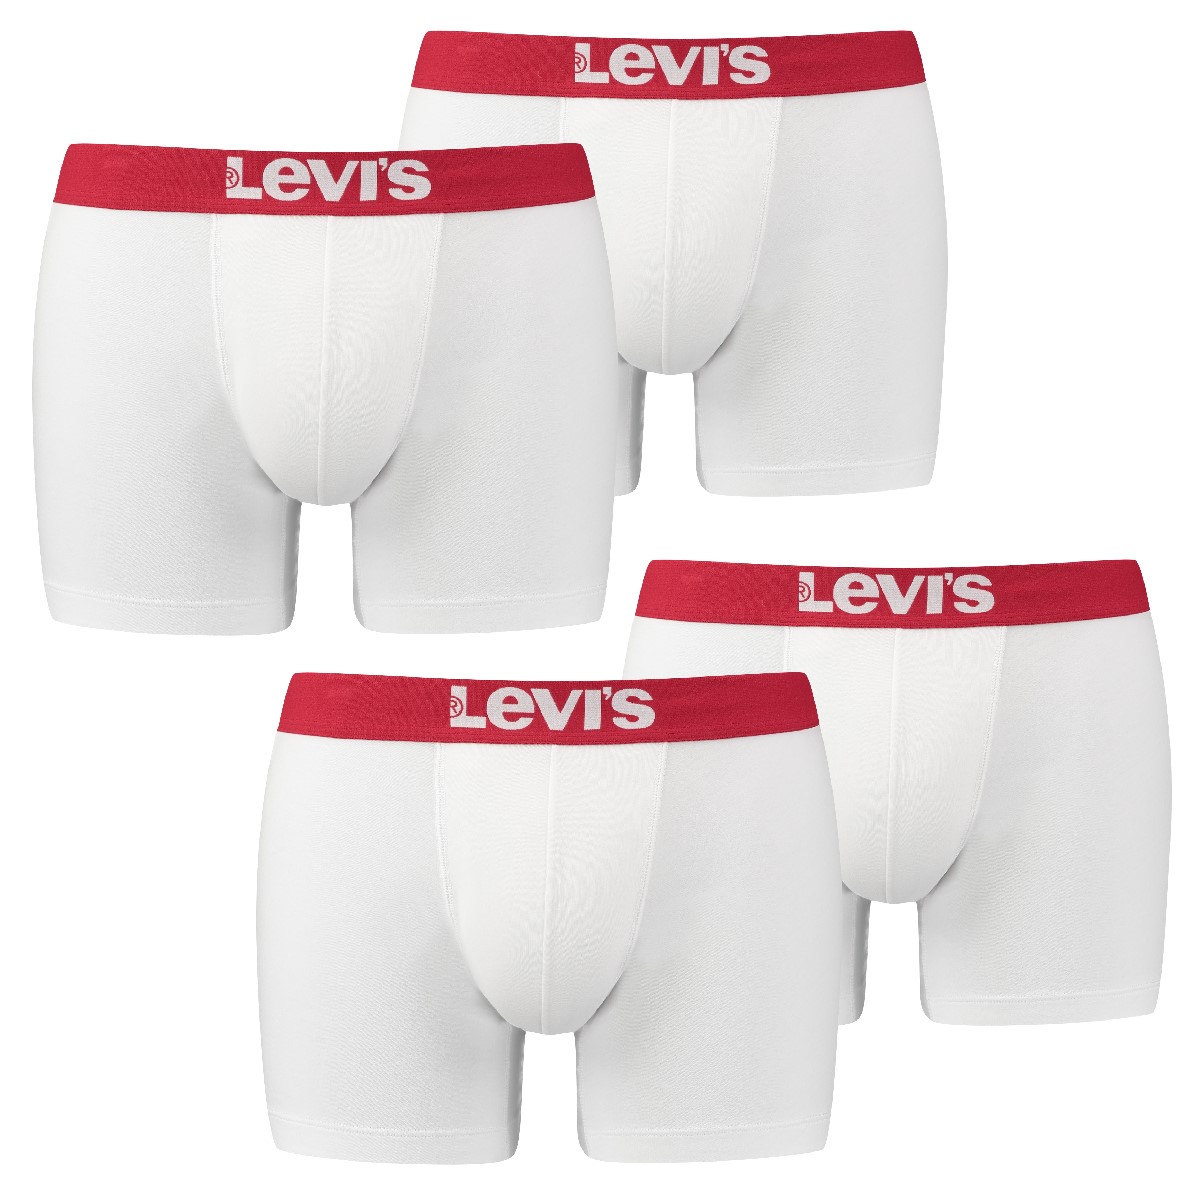 Levi's Herren Levis 200SF Boxer Brief Shorts, Weiß (White 317), Large (2er Pack)